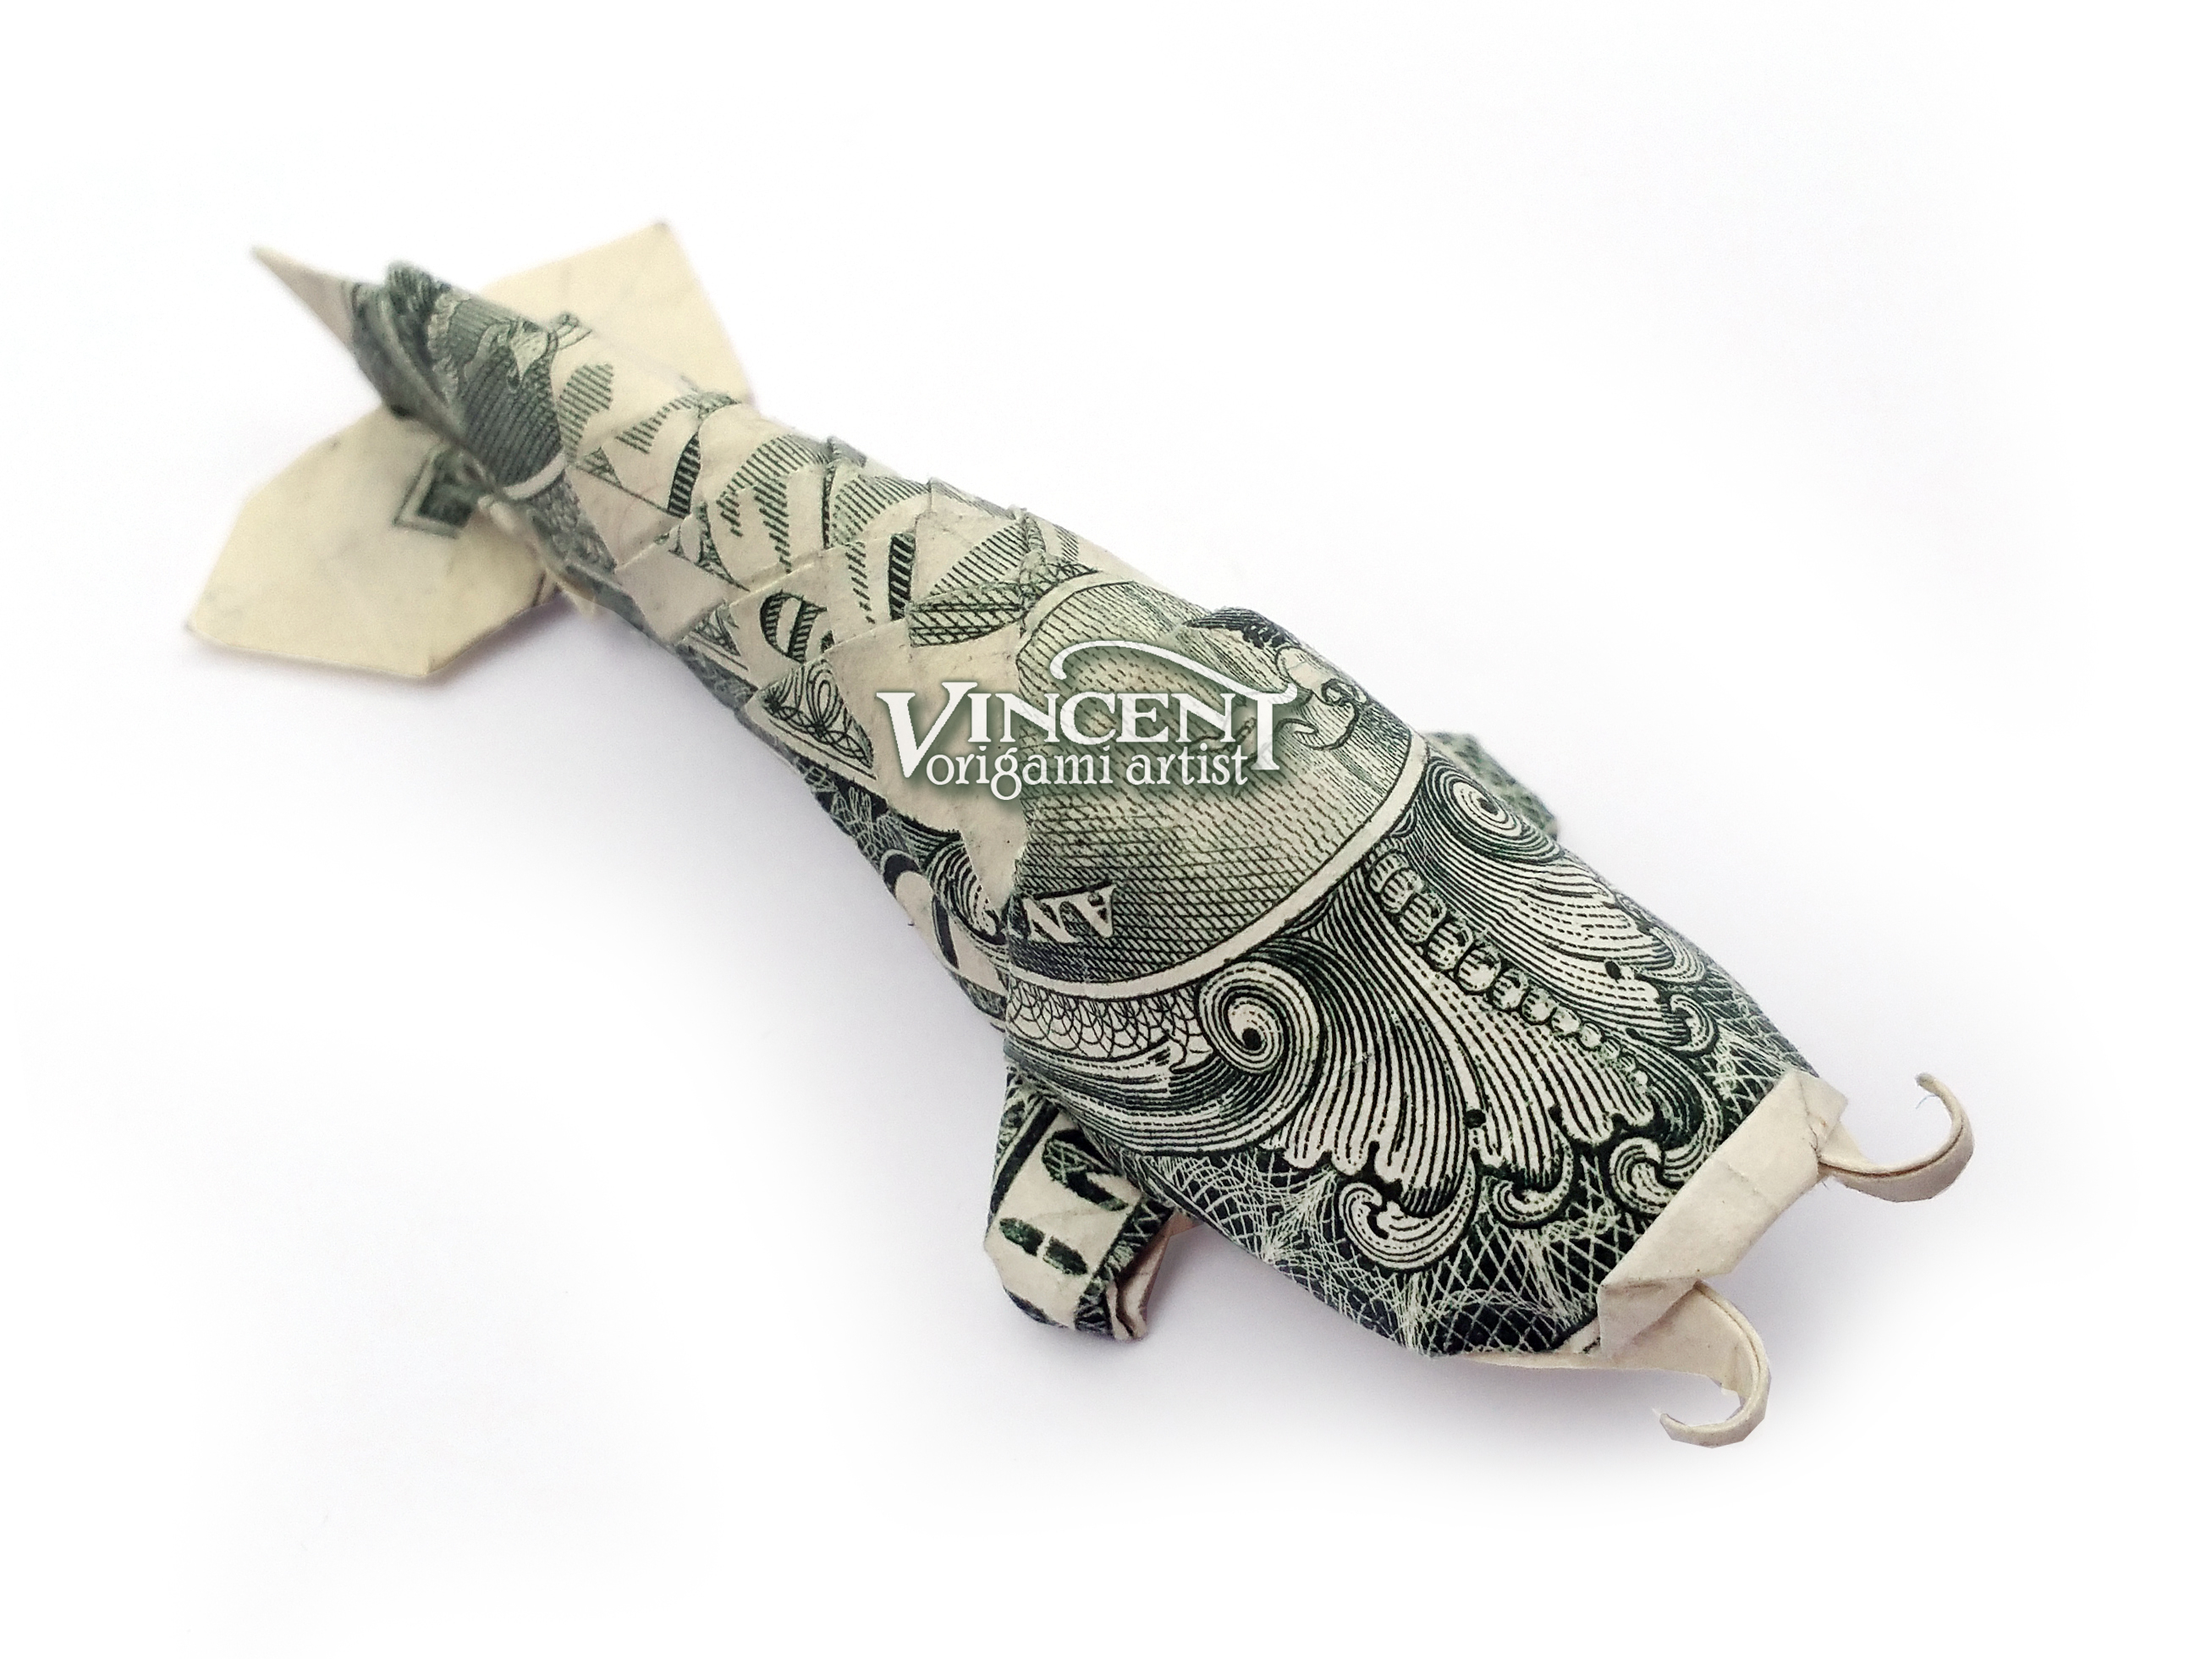 Dollar Bill Koi Fish Origami Instructions Koi Fish Money Origami Art Dollar Bill Animal Sea Creature Cash Sculptors Bank Note Handmade